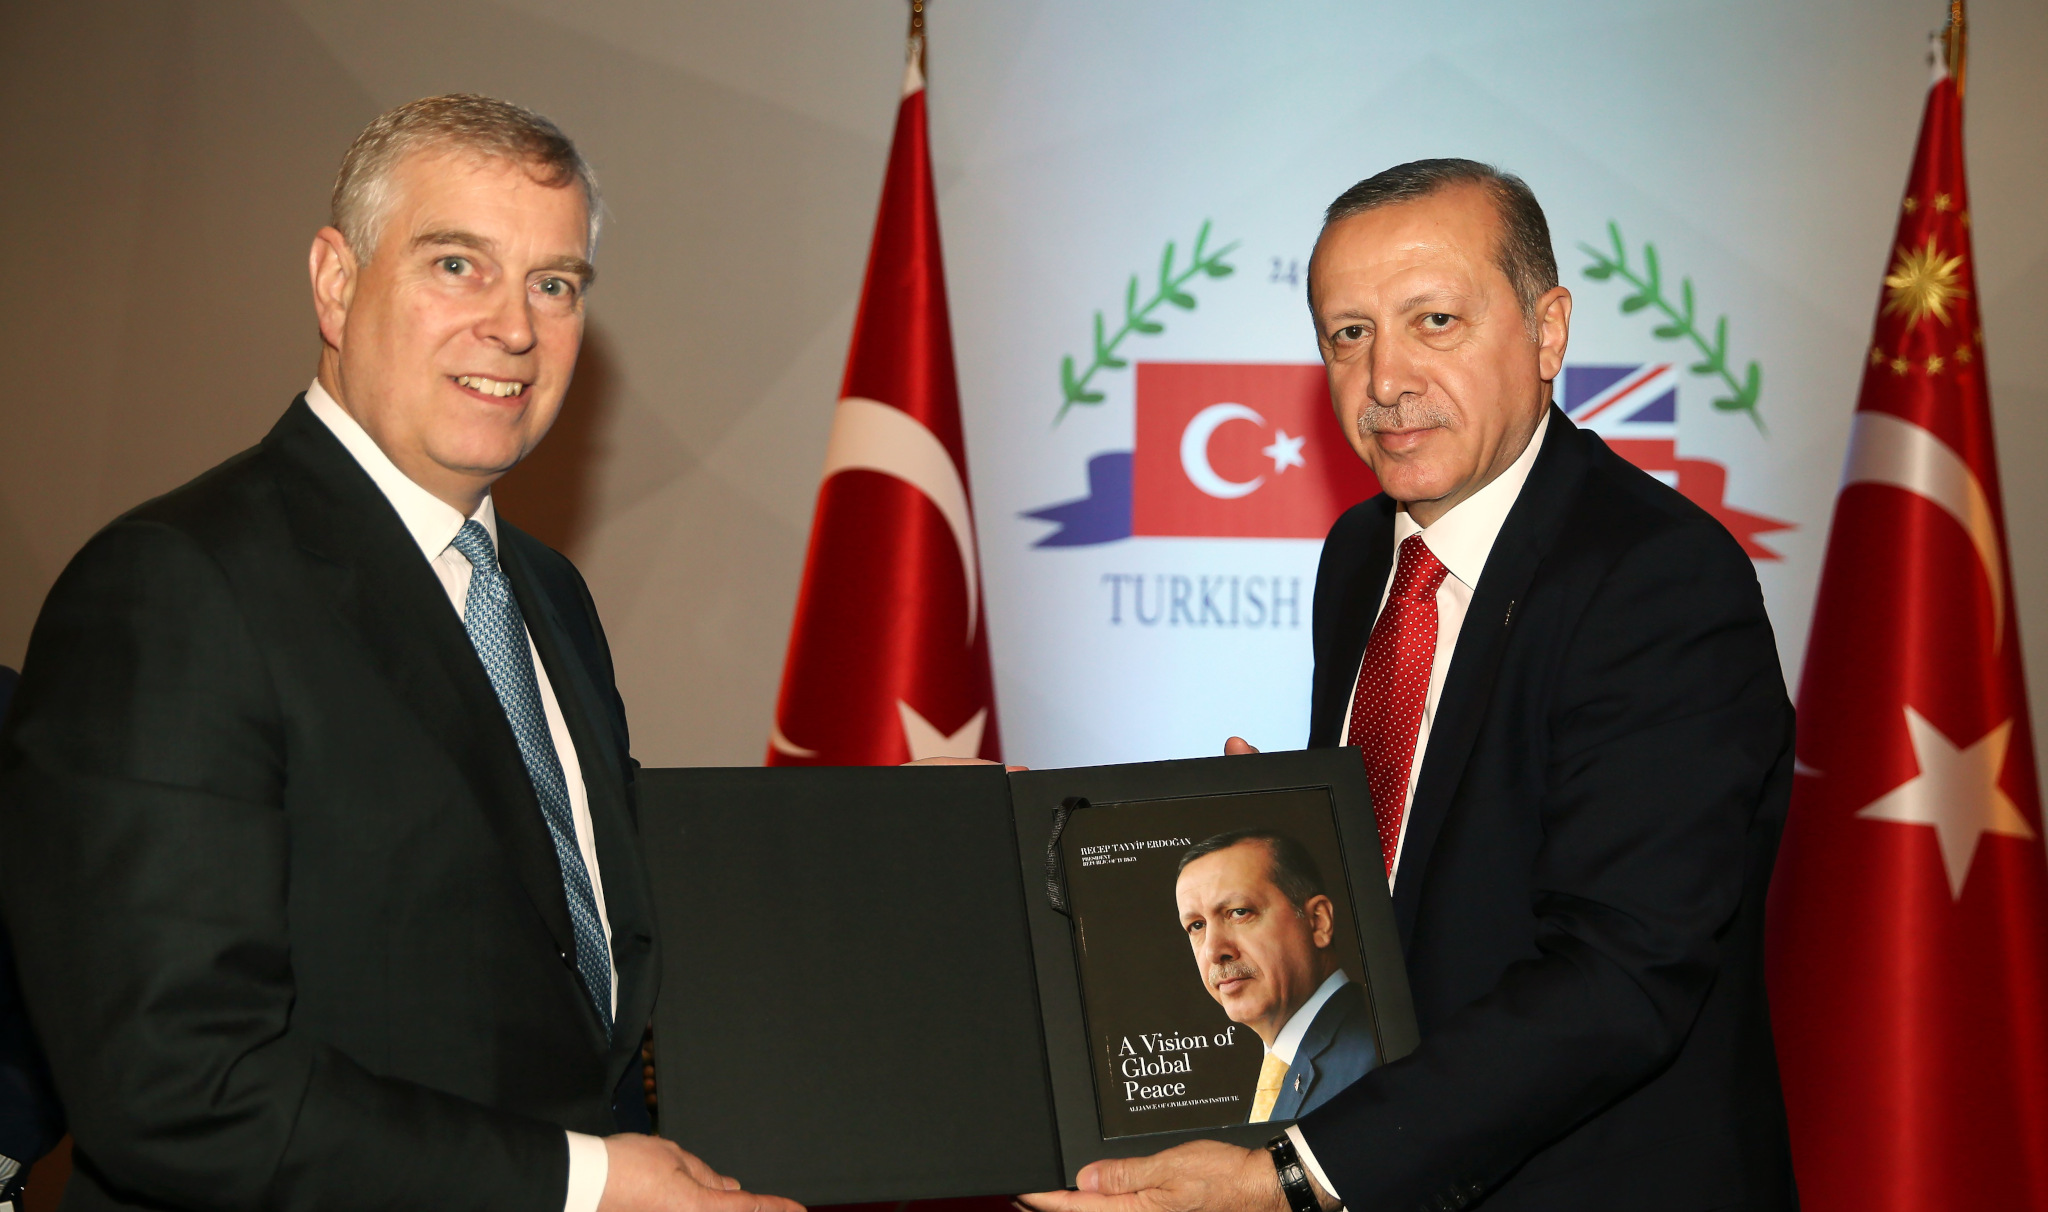 The British cabal courting Turkey’s Erdogan regime